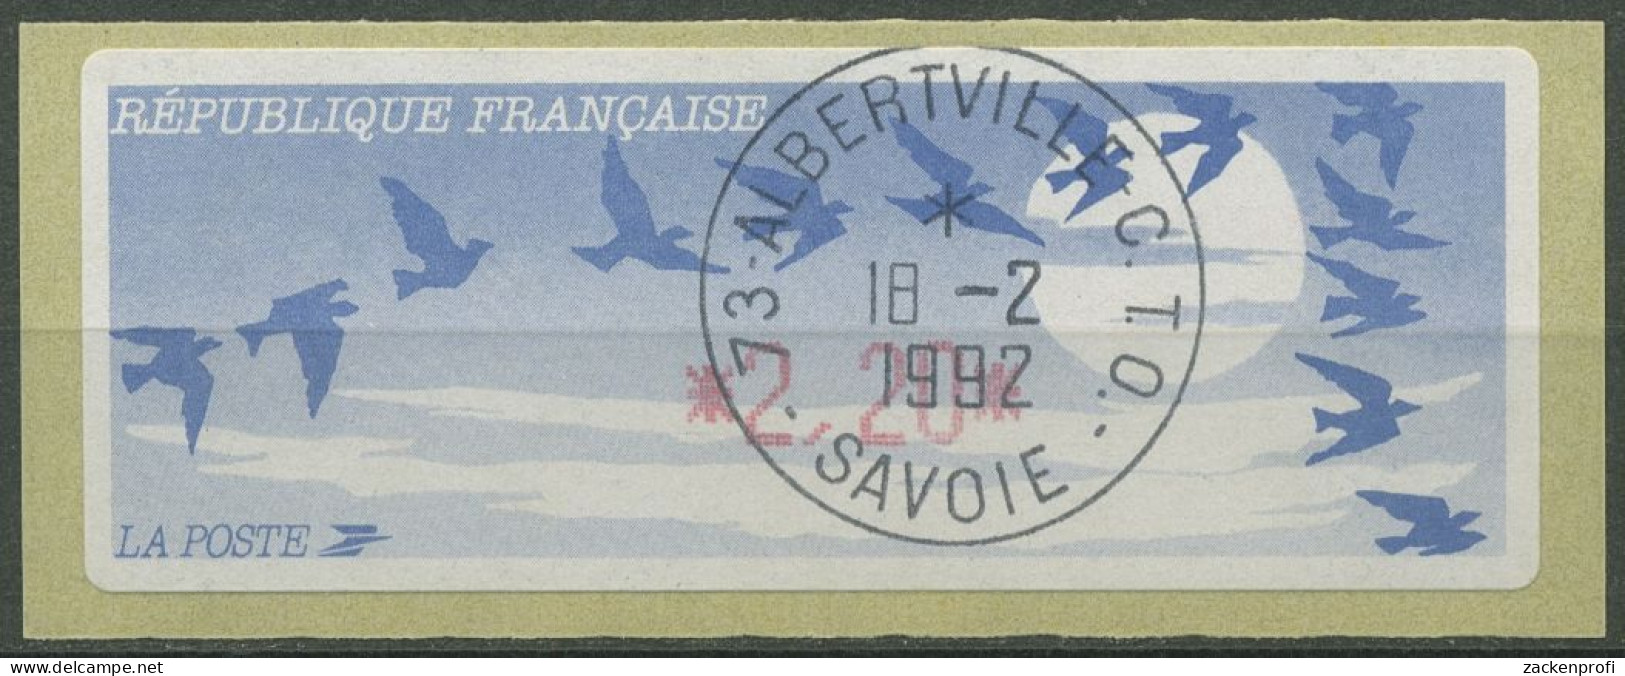 Frankreich ATM 1990 Vogelzug Einzelwert ATM 11.2 B Gestempelt - 1985 Papel « Carrier »